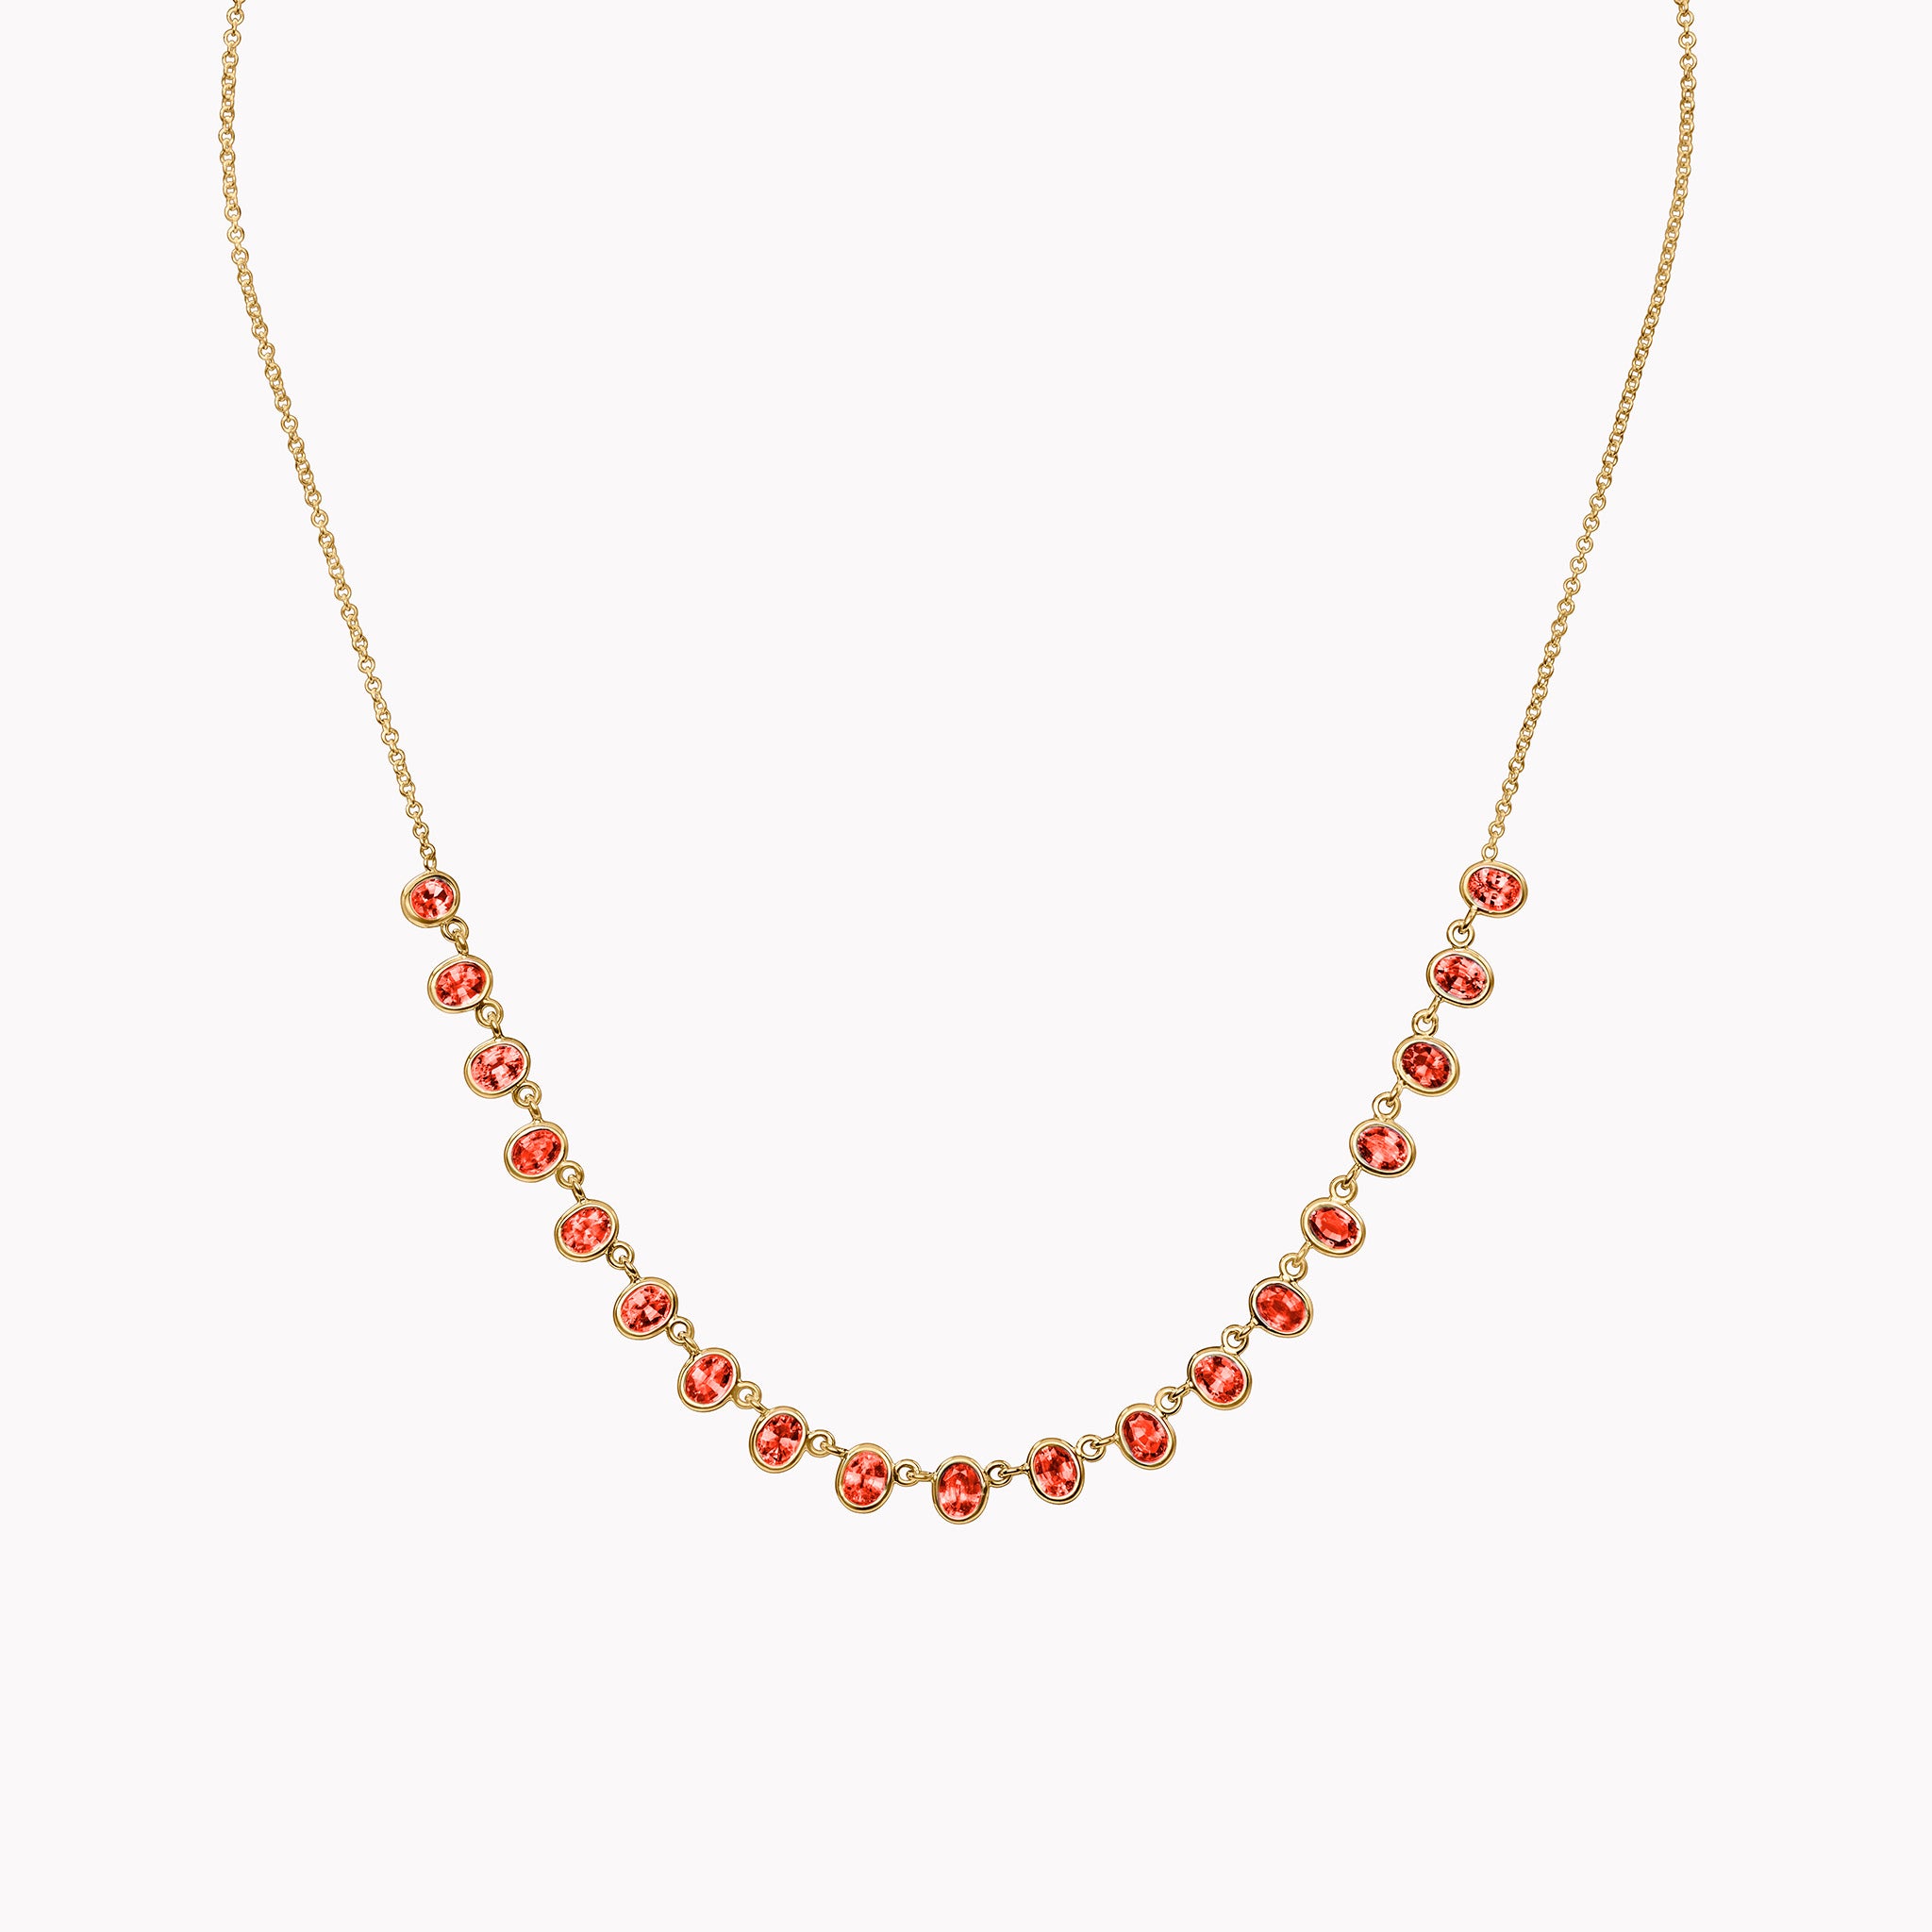 The Petite Lena Orange Sapphire Necklace